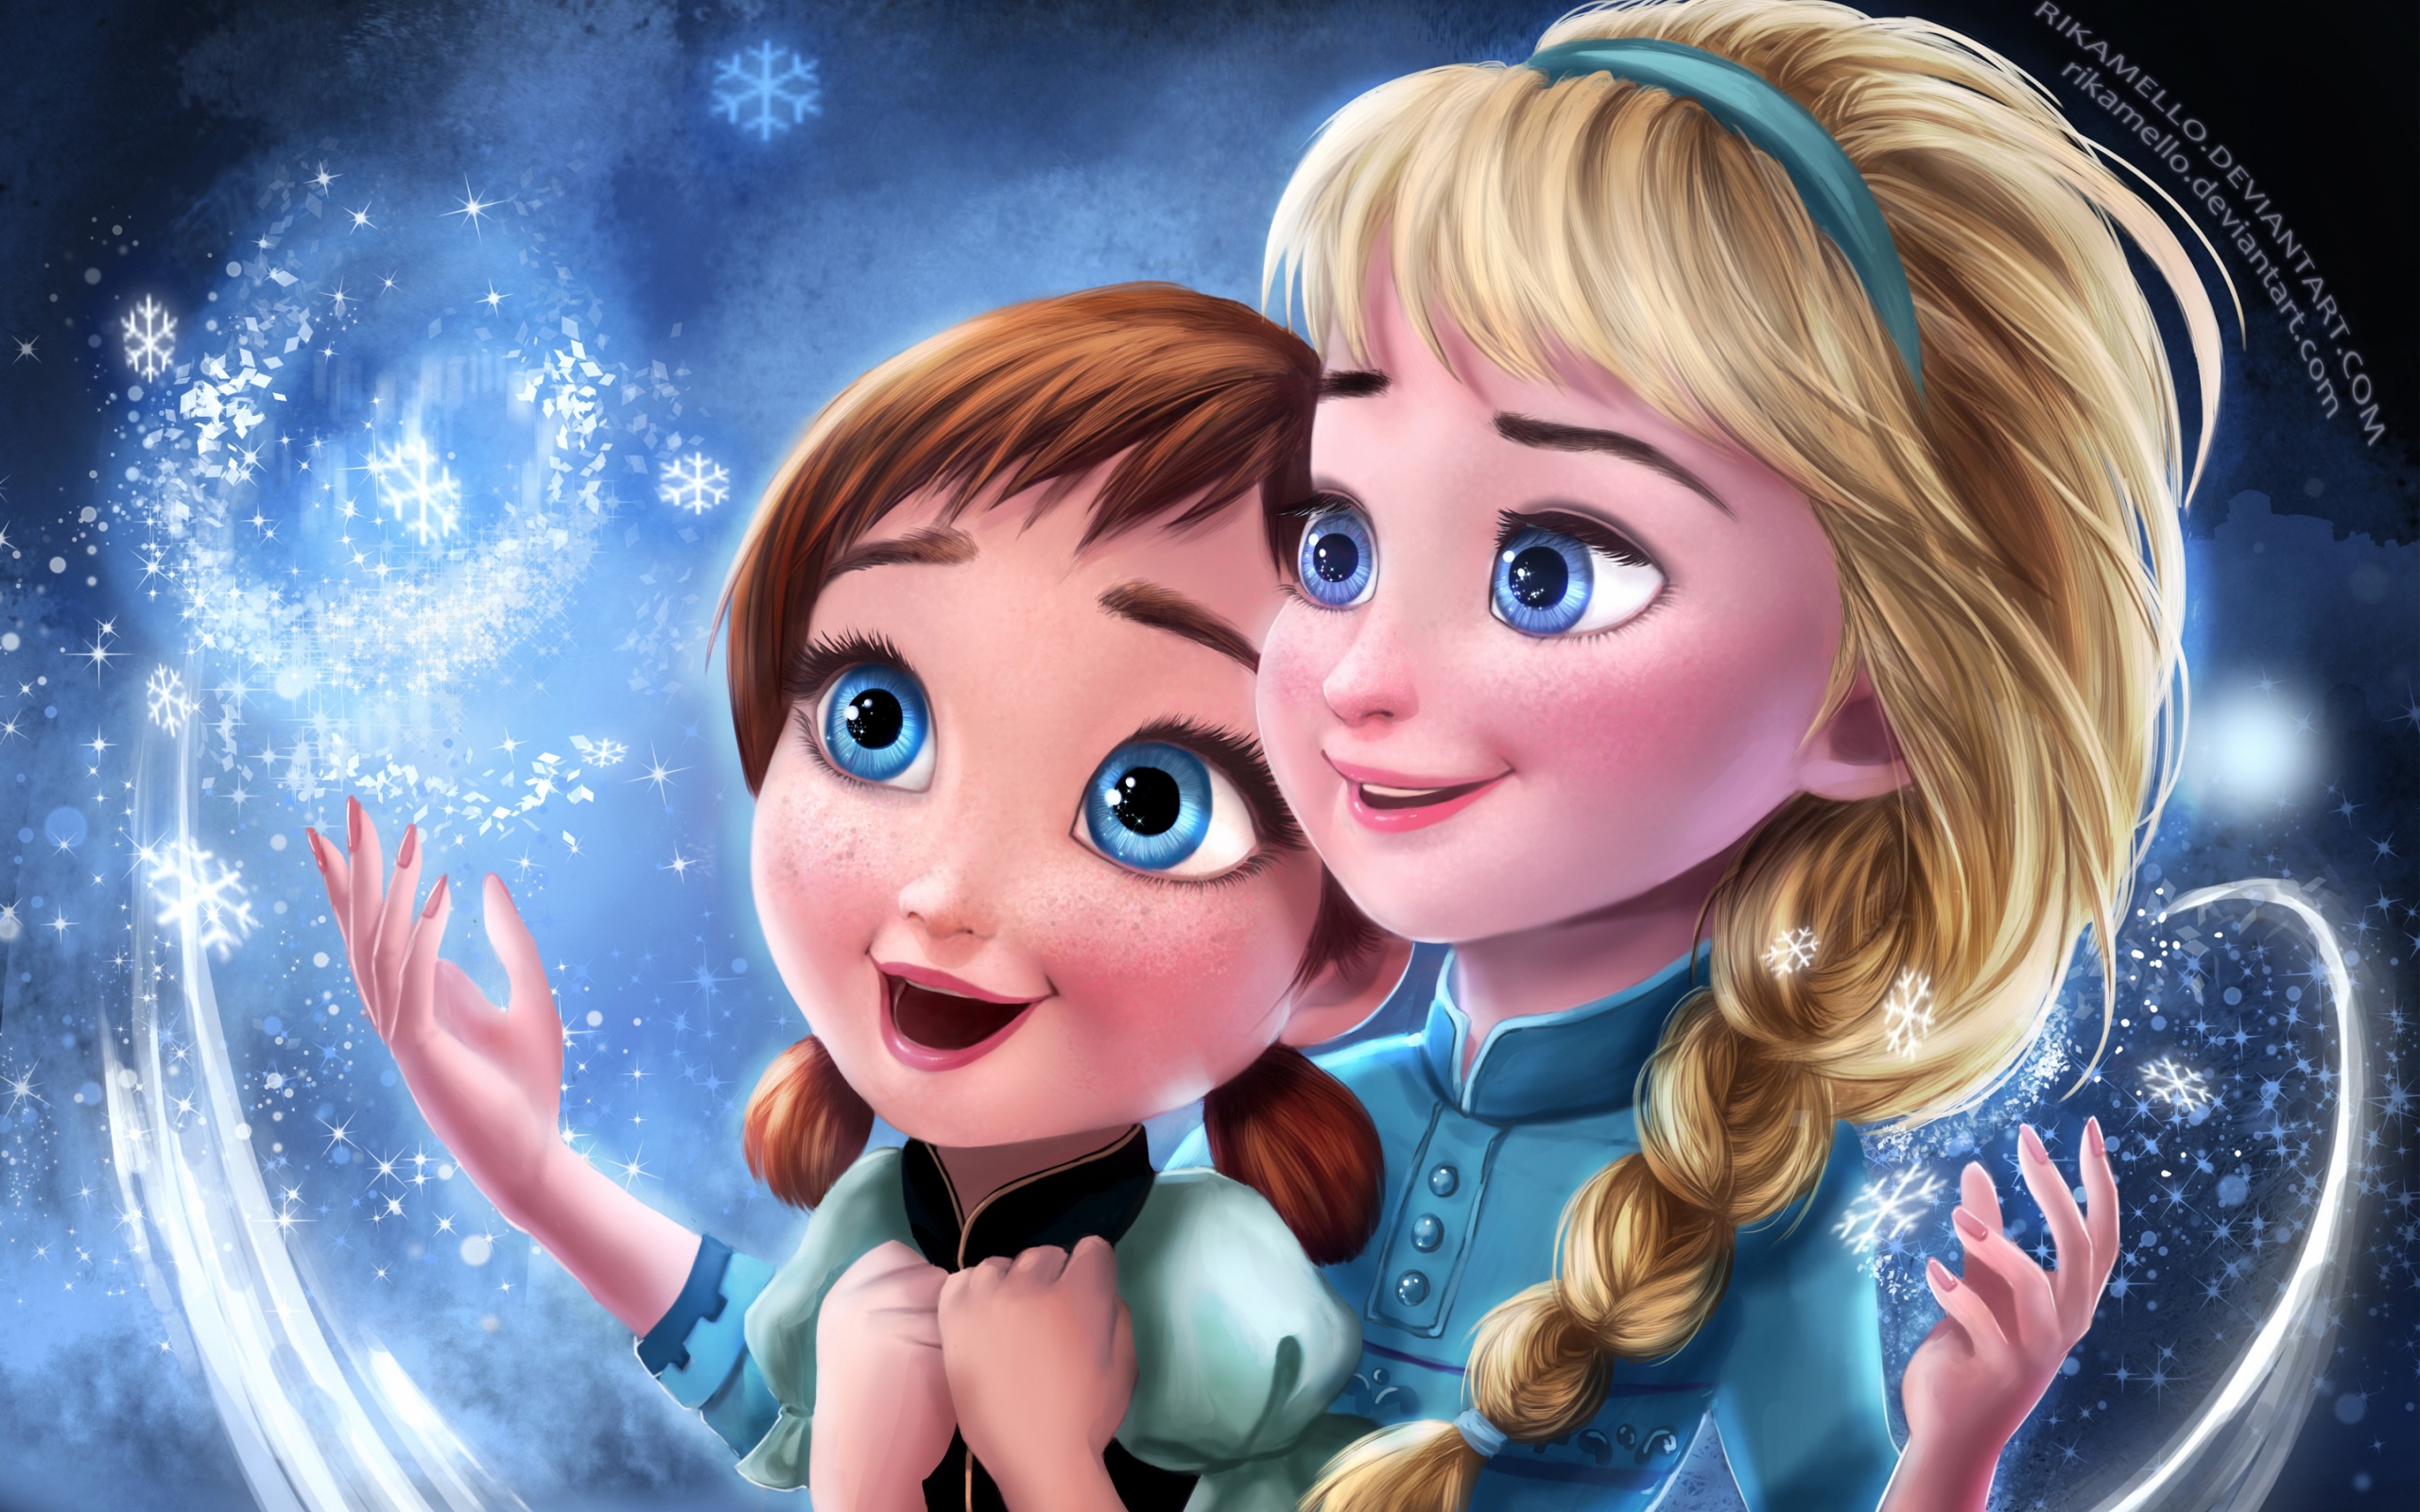 Frozen Elsa Anna Sisters Wallpaper in jpg format for free download